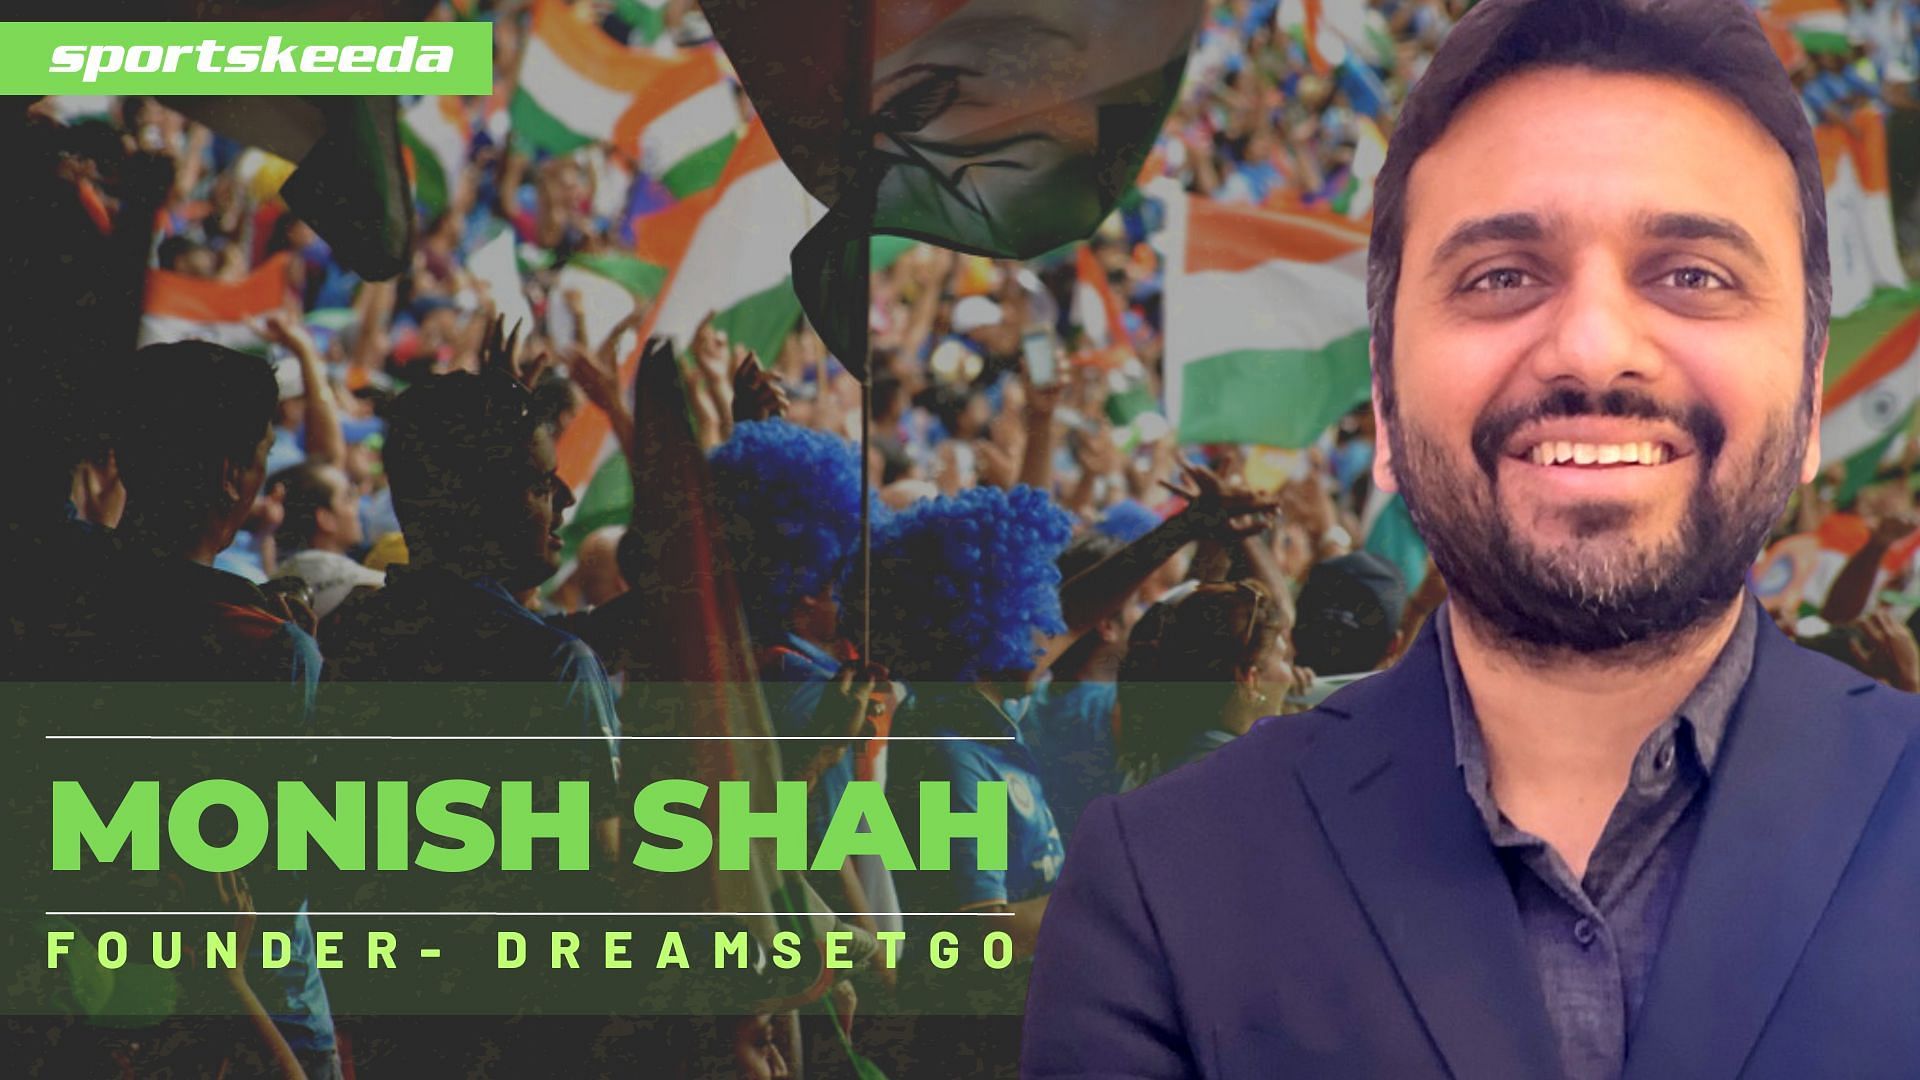 DreamSetGo Founder Monish Shah